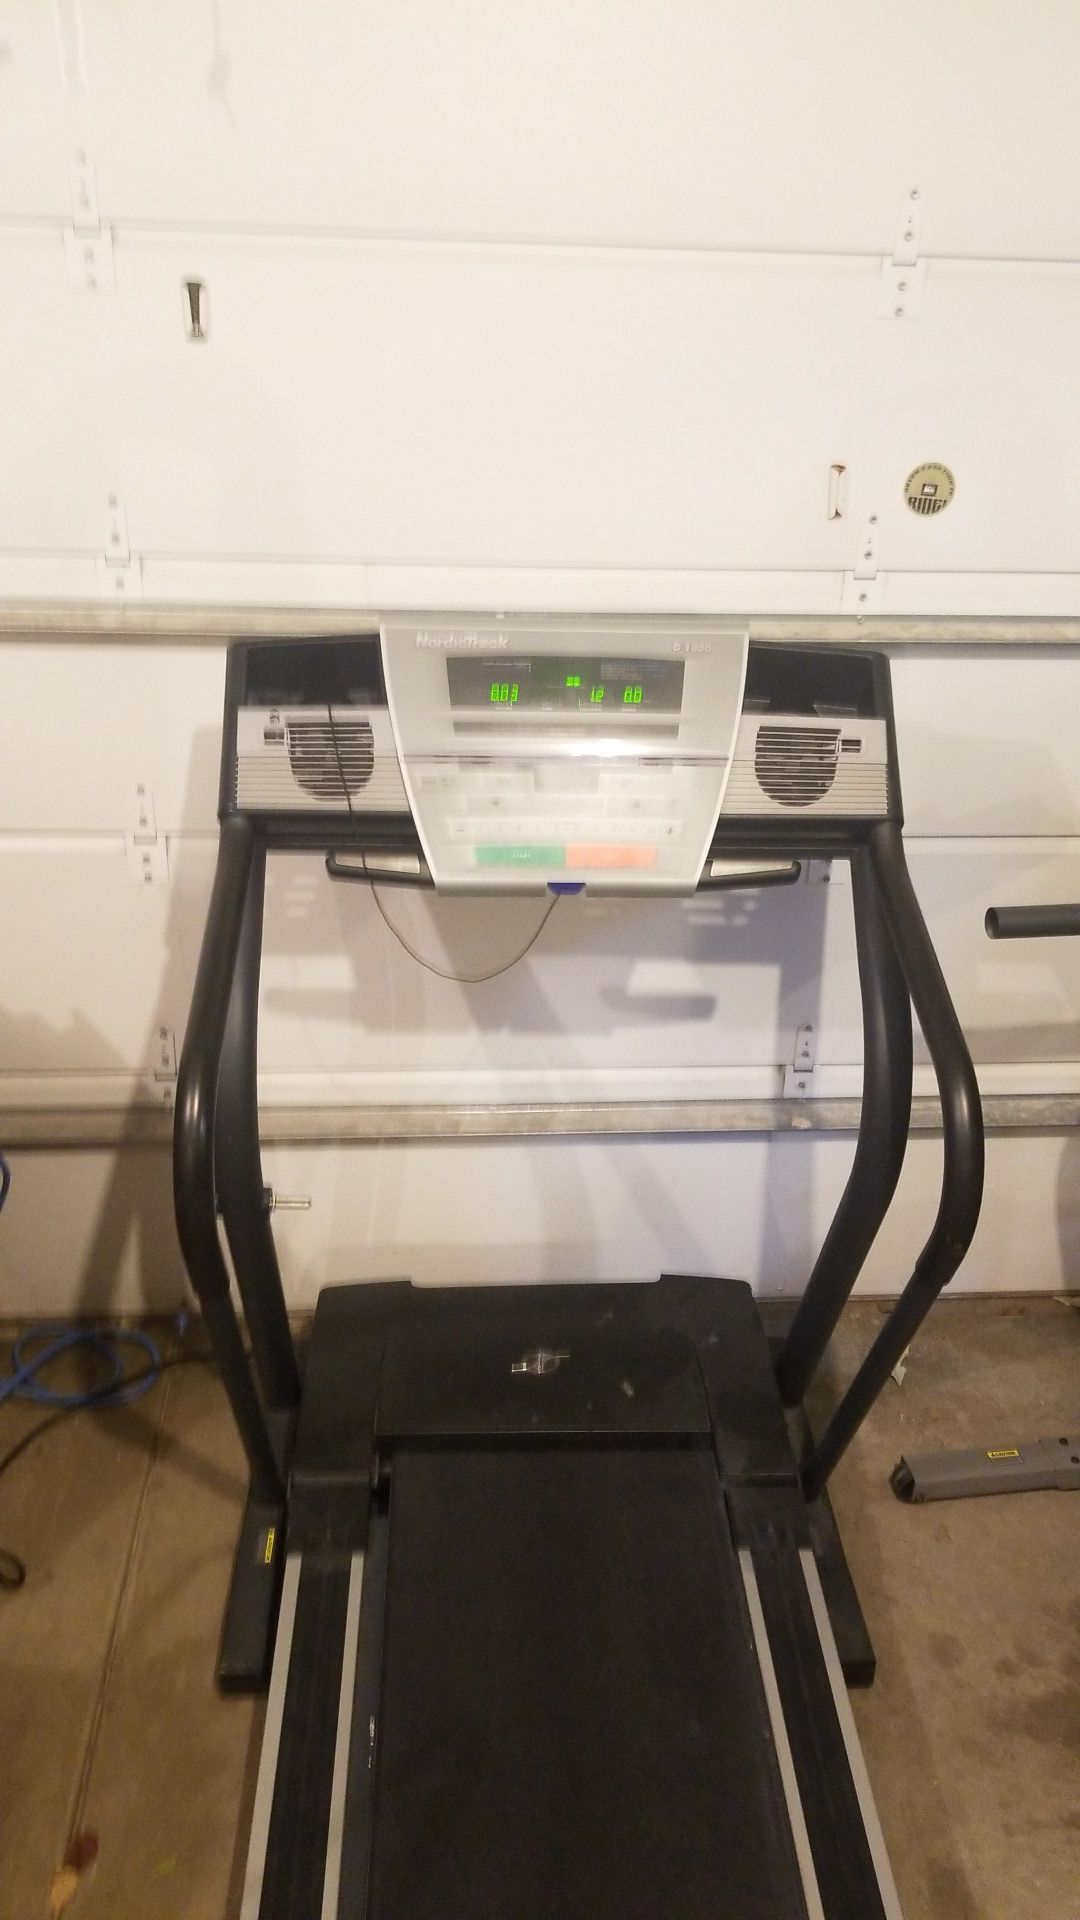 NordicTrack C1900 Treadmill